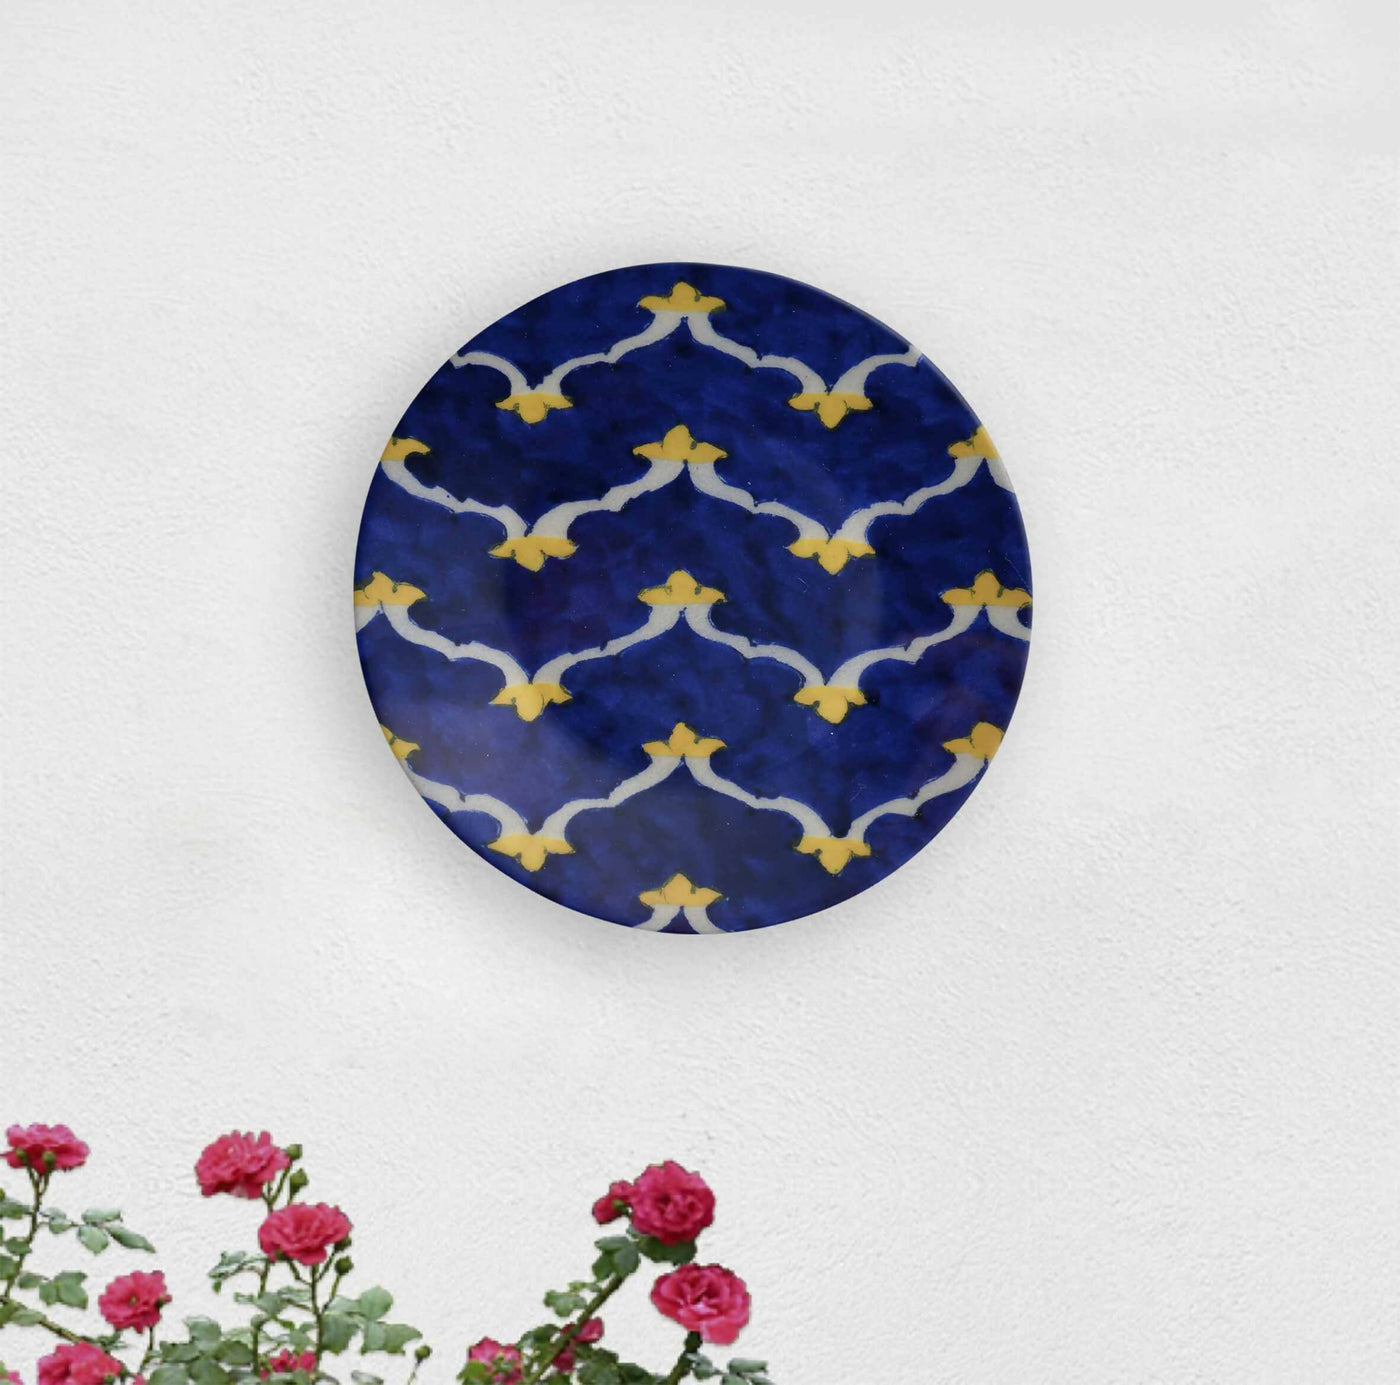 Turkish Star Summon Decorative Wall Plate - Wall Decor - 1